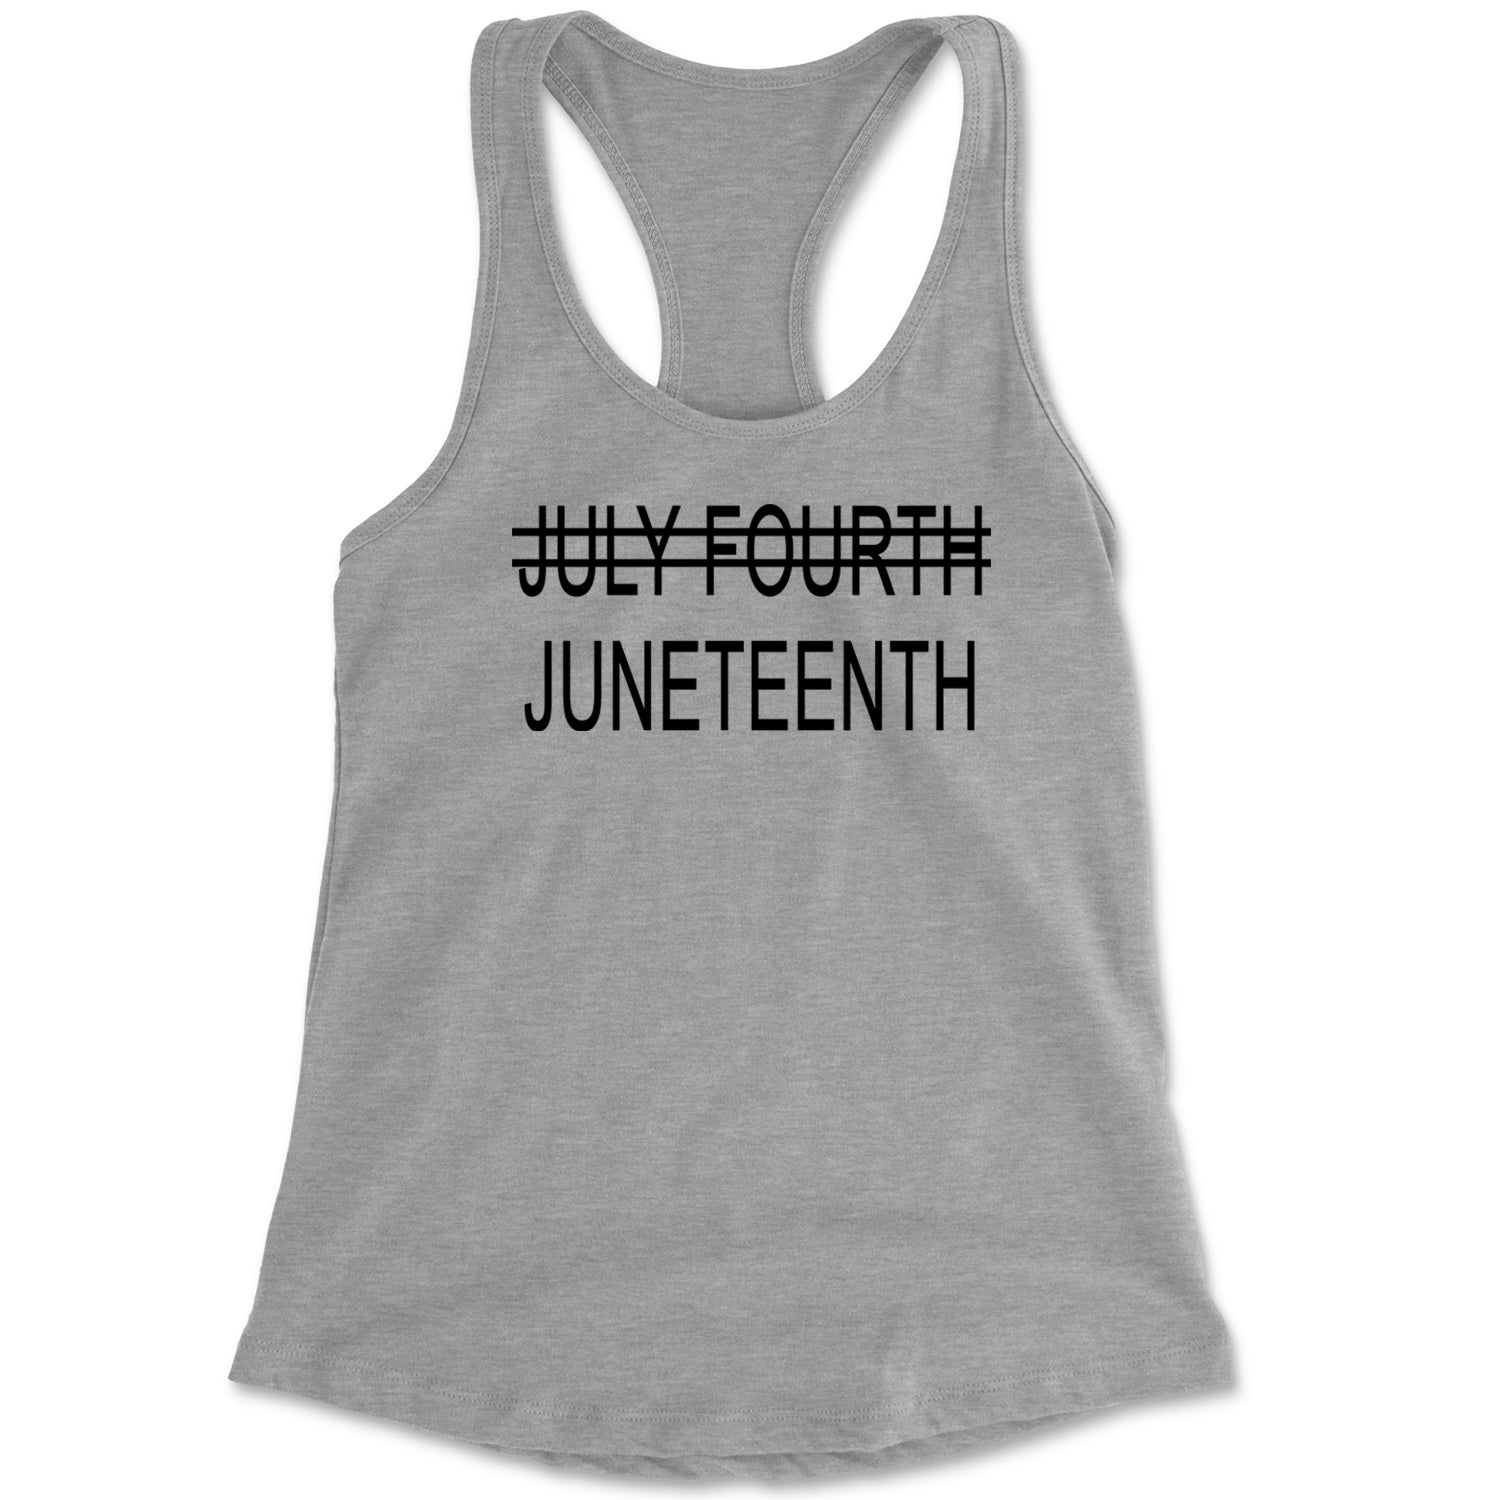 Juneteenth (July Fourth Crossed Out) Jubilee Racerback Tank Top for Women